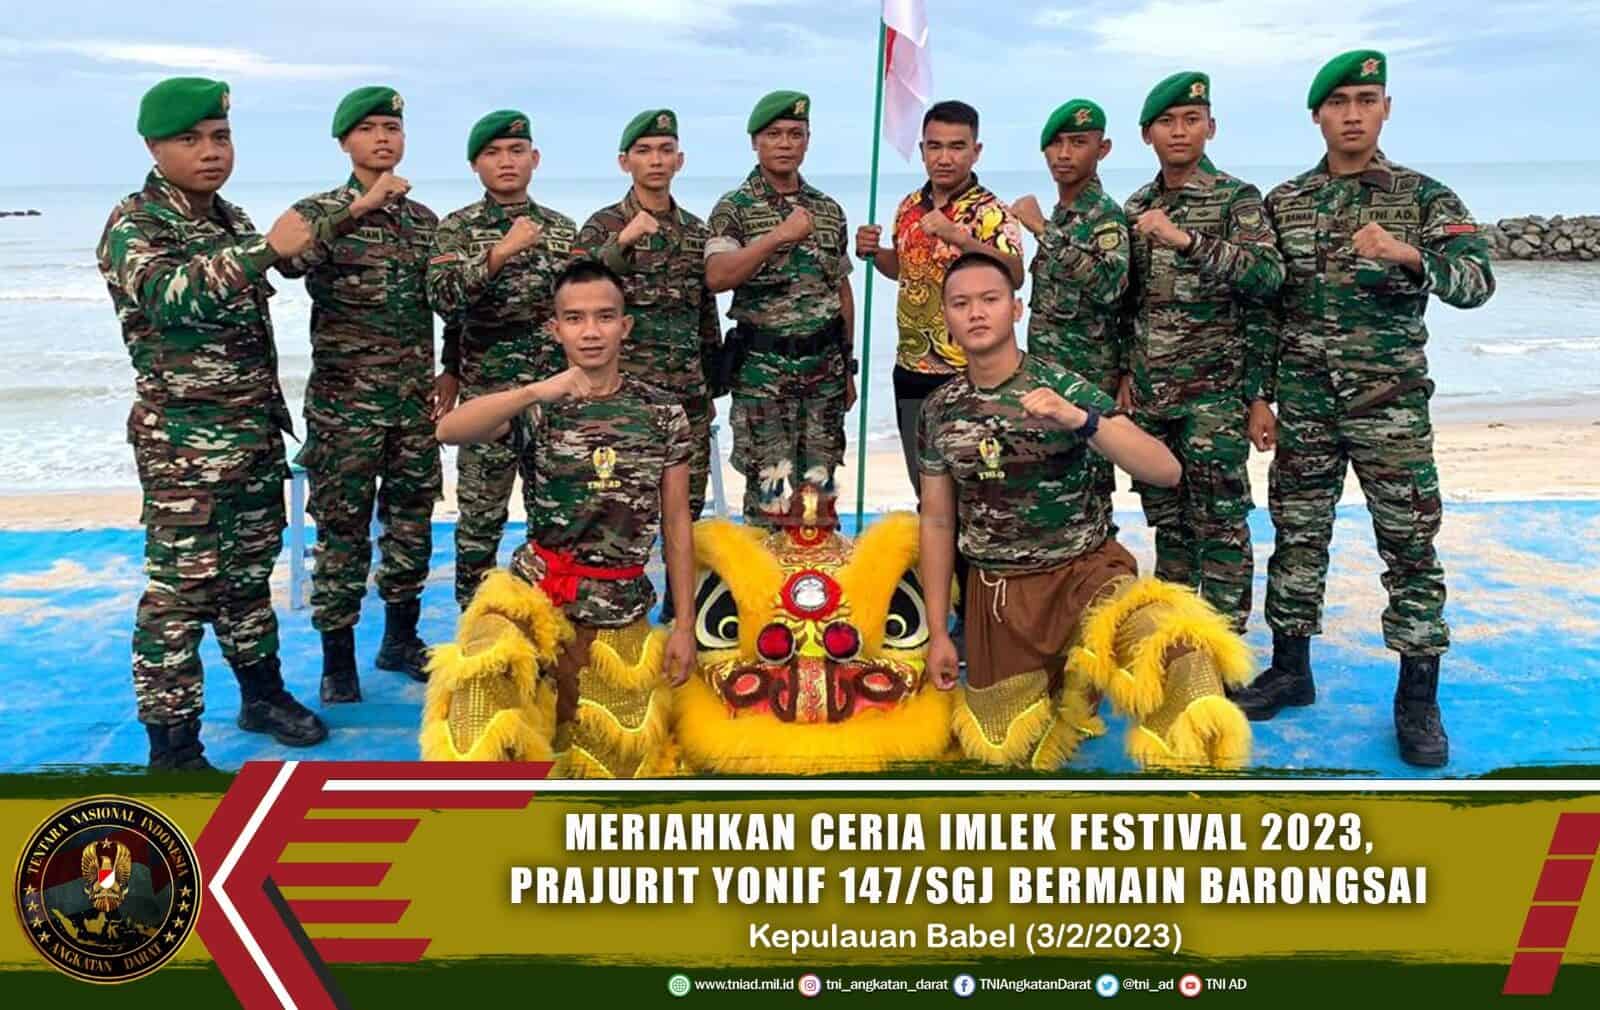 Meriahkan Ceria Imlek Festival 2023, Prajurit Yonif 147/SGJ Bermain Barongsai